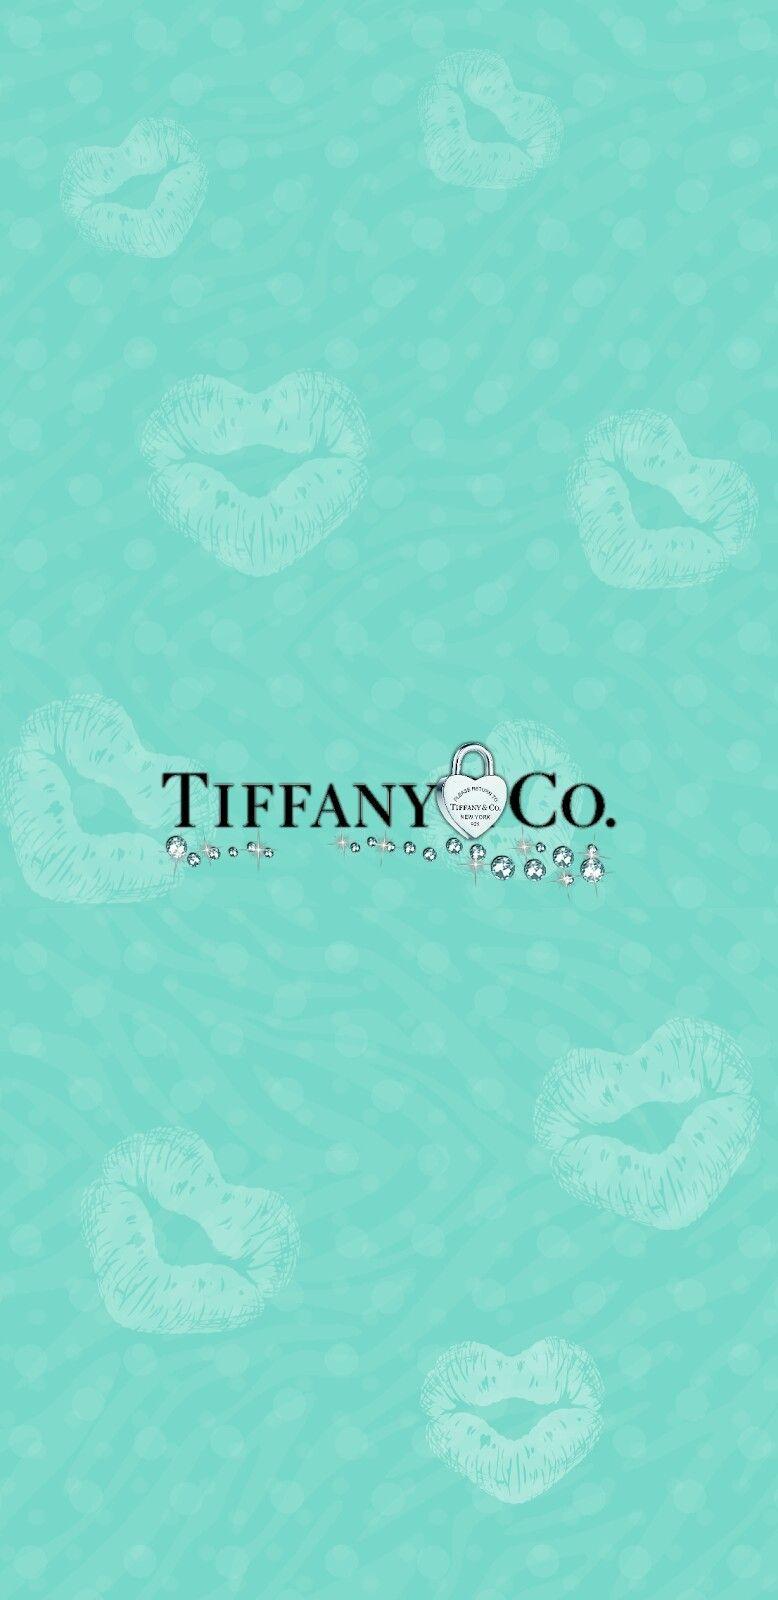 tiffany & co background